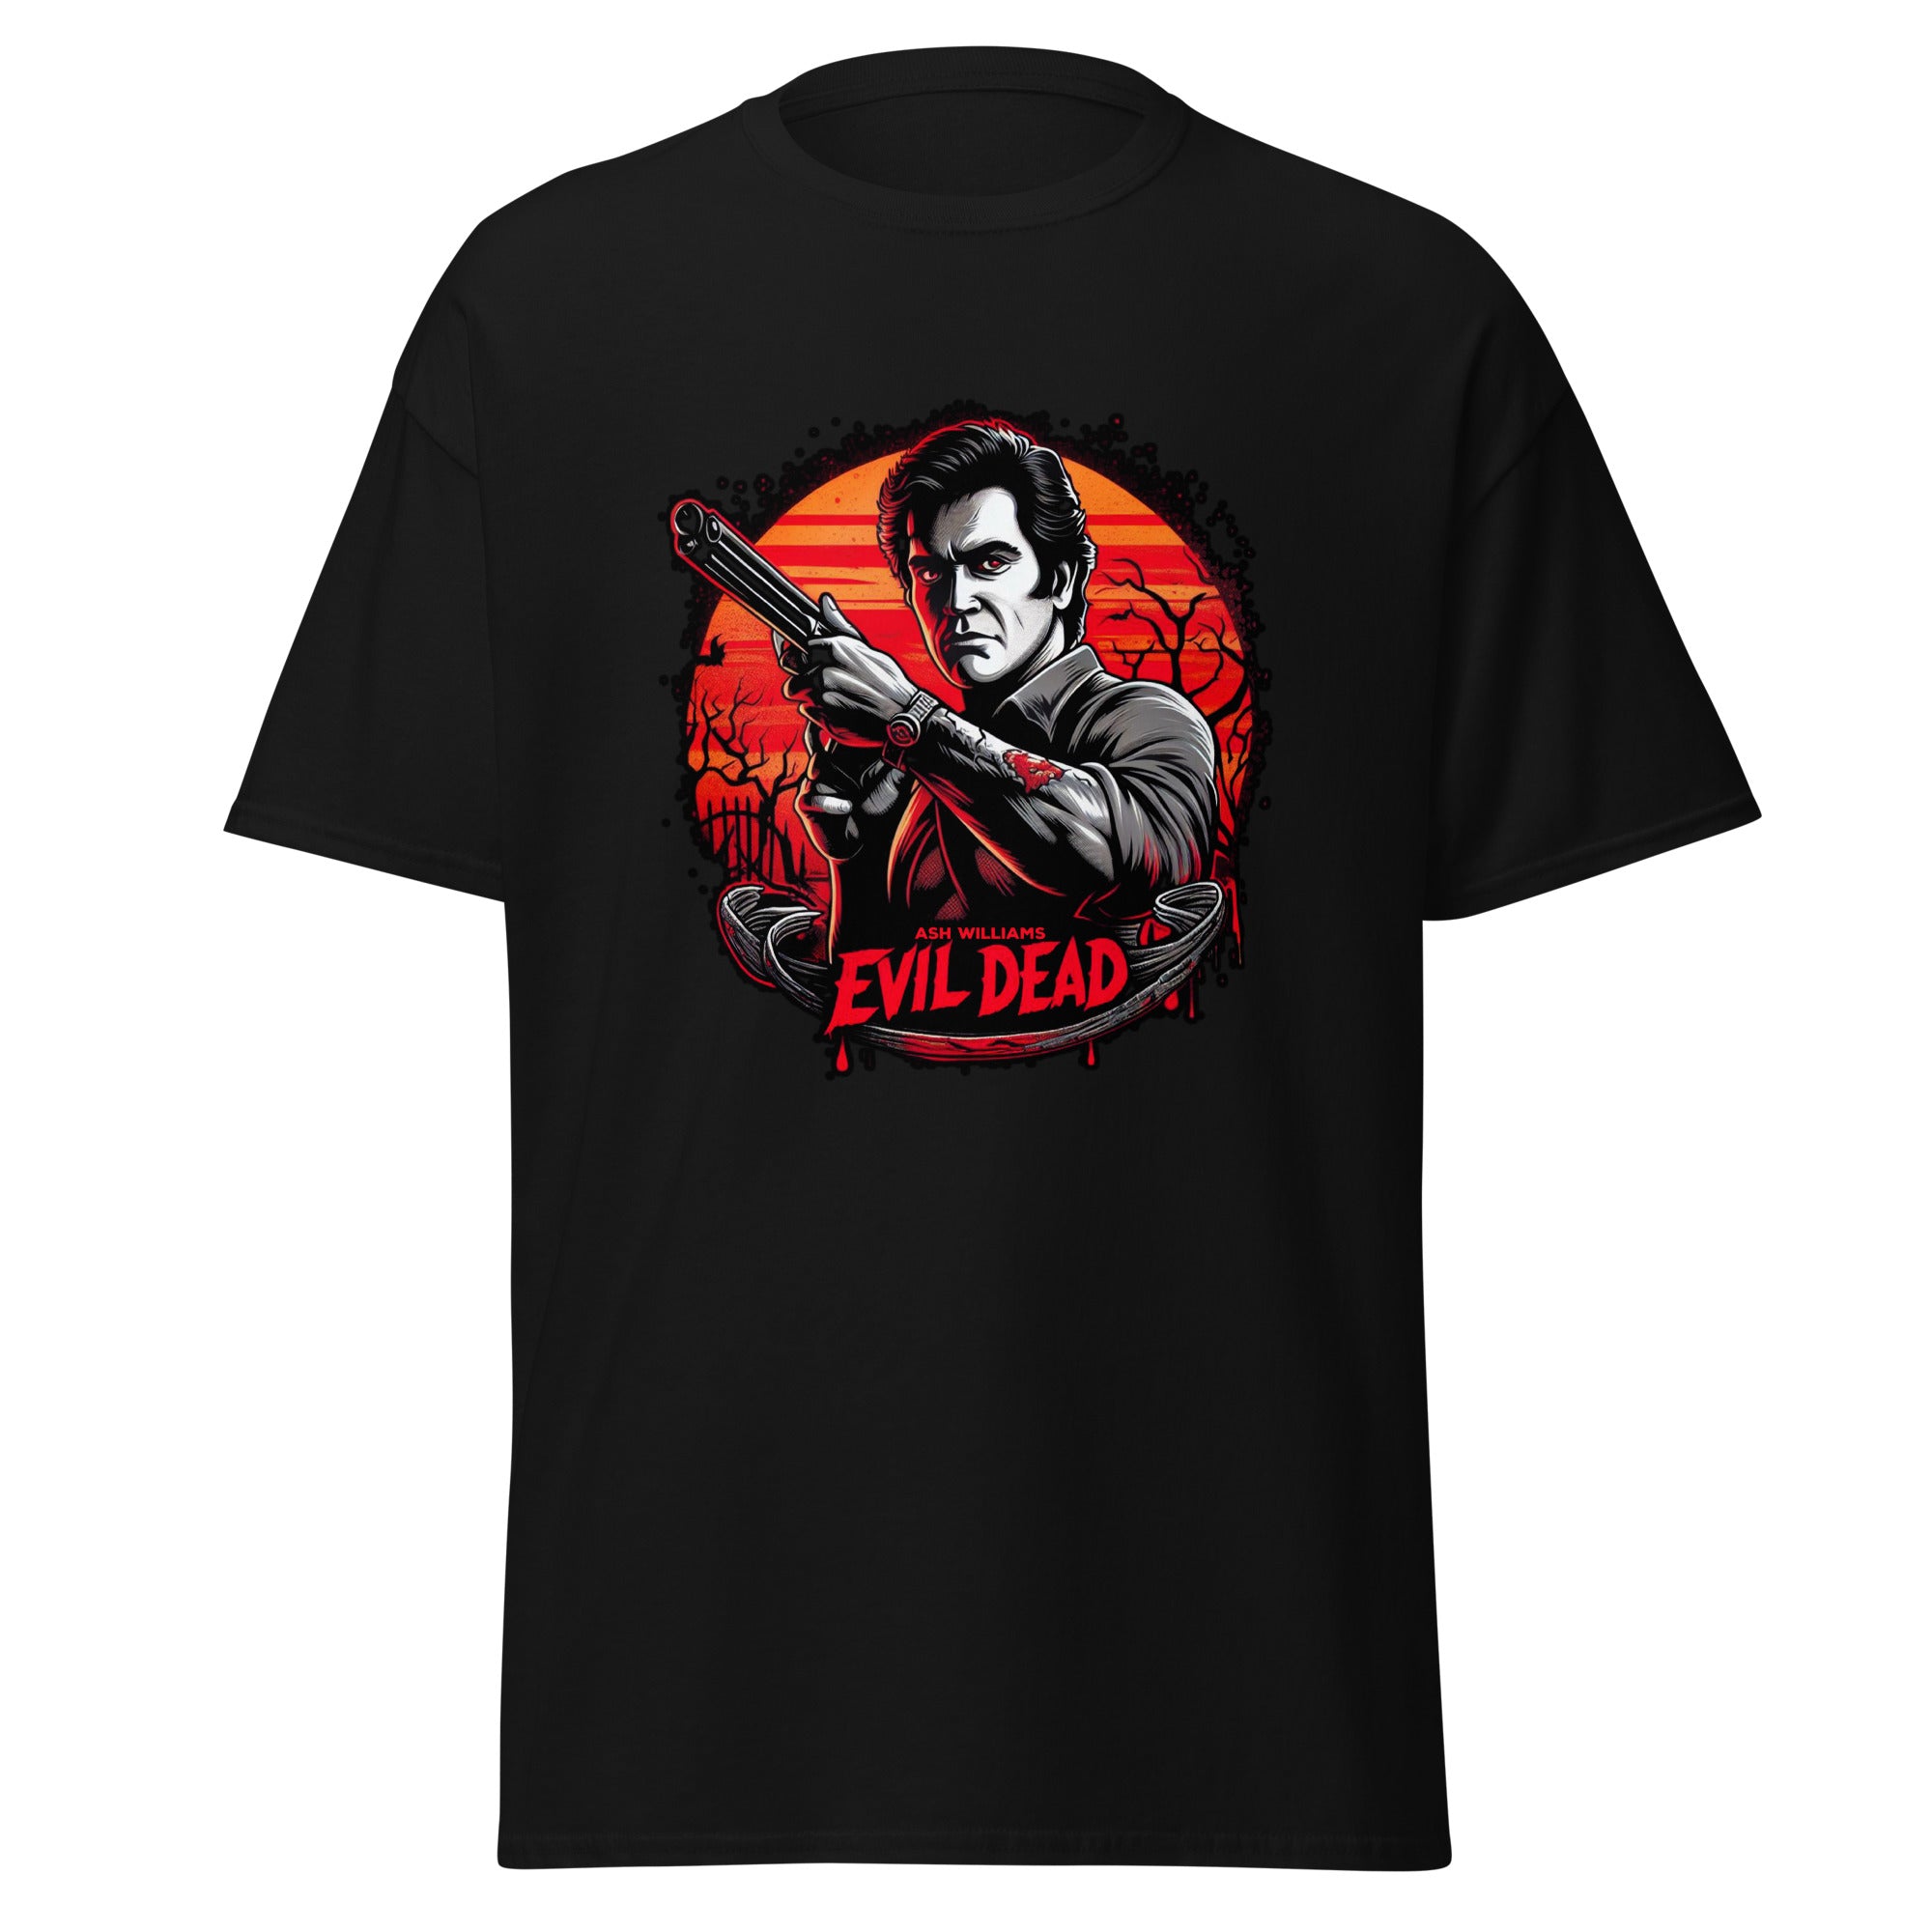 "Ash Williams Evil Dead T-Shirt - Groovy Horror Icon Apparel - Graphic Bootleg